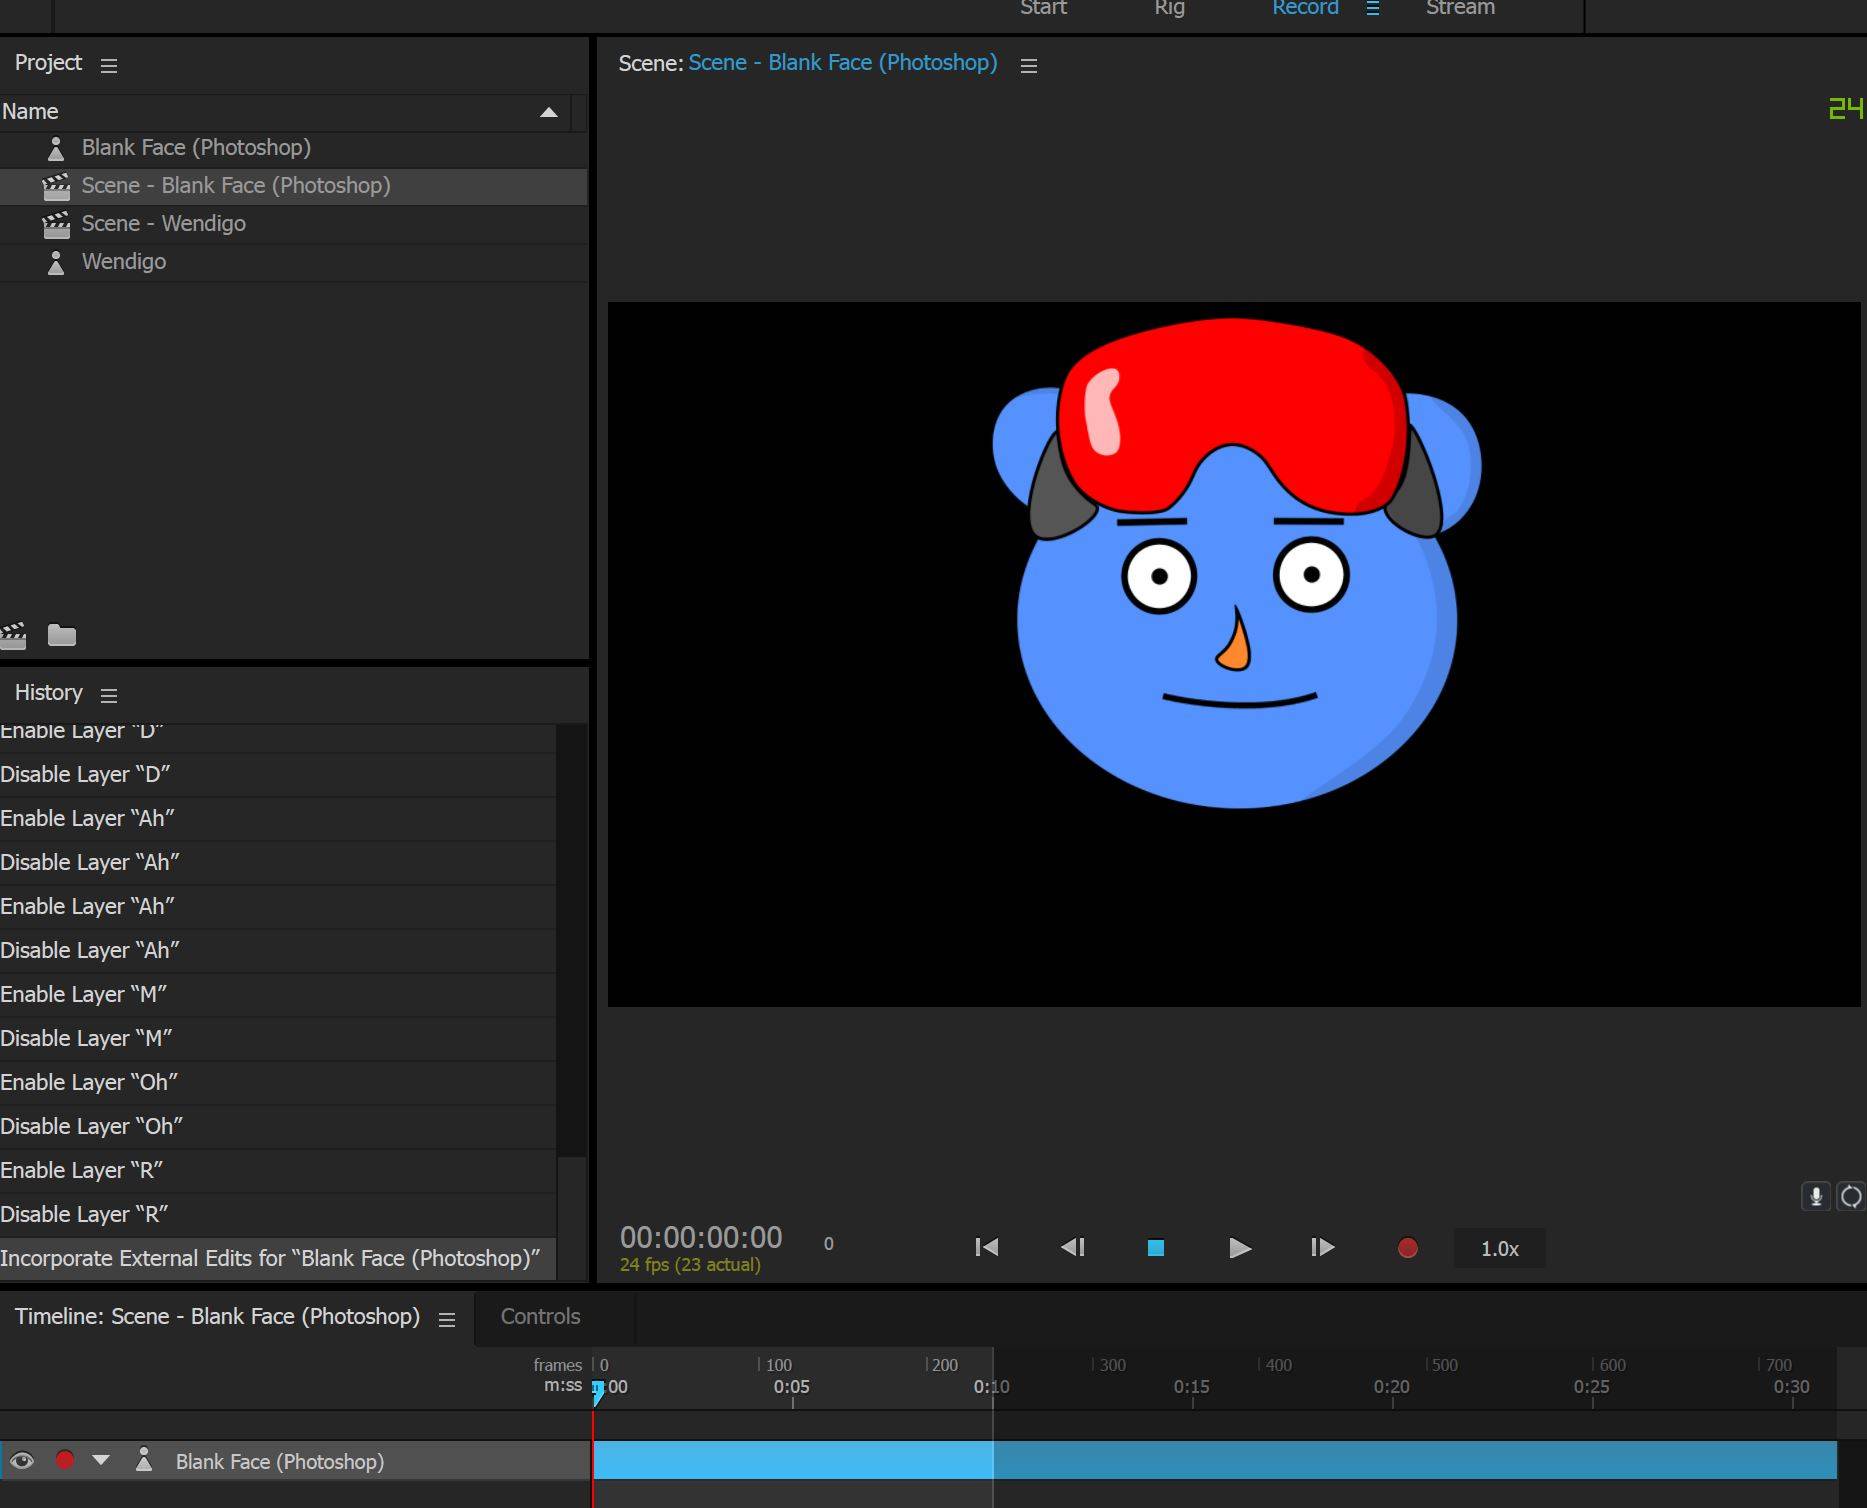 Adobe Character Animator 2024 v24.0.0.46 for mac download